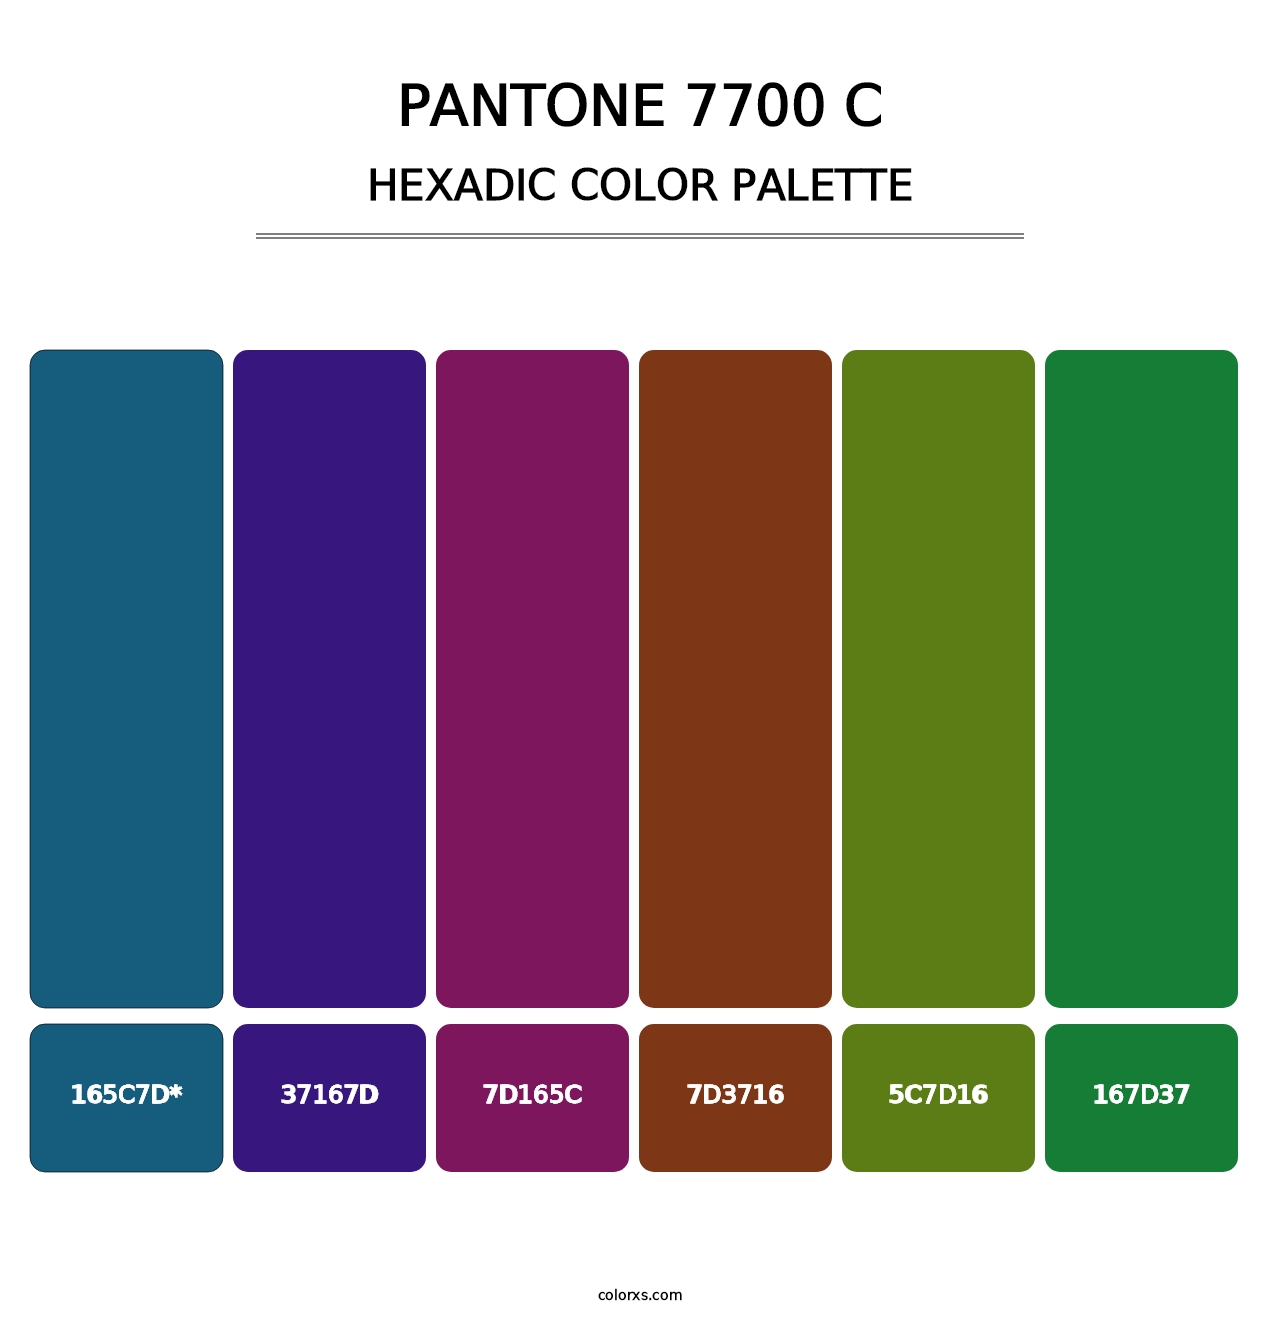 PANTONE 7700 C - Hexadic Color Palette